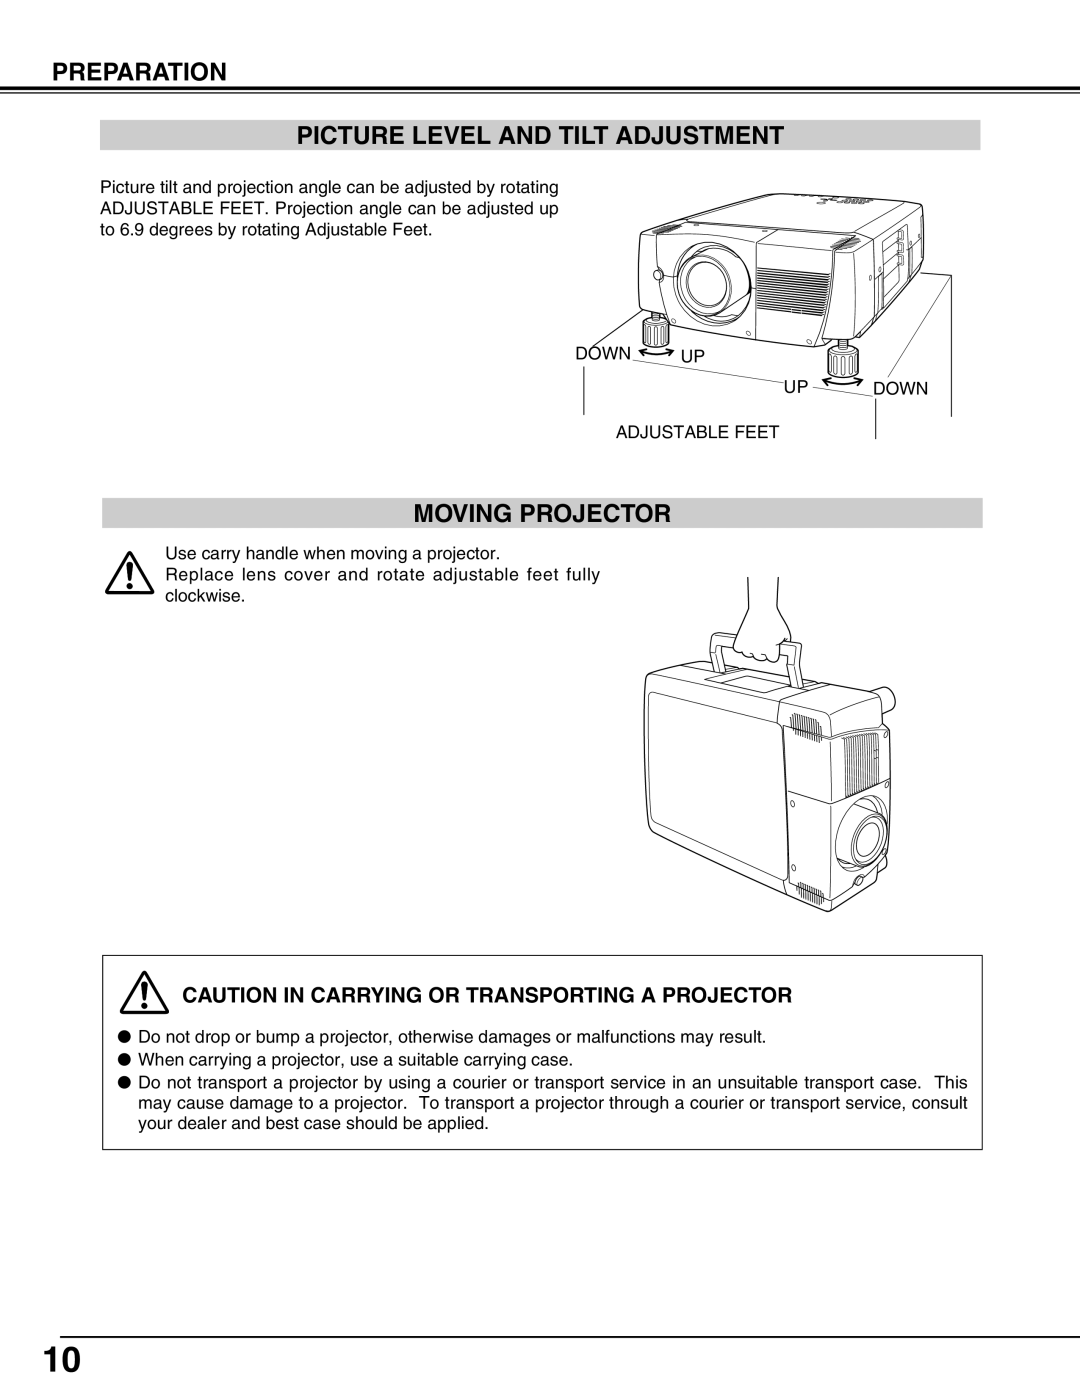 Christie Digital Systems 38-VIV302-01 user manual Preparation Picture Level And Tilt Adjustment, Moving Projector 